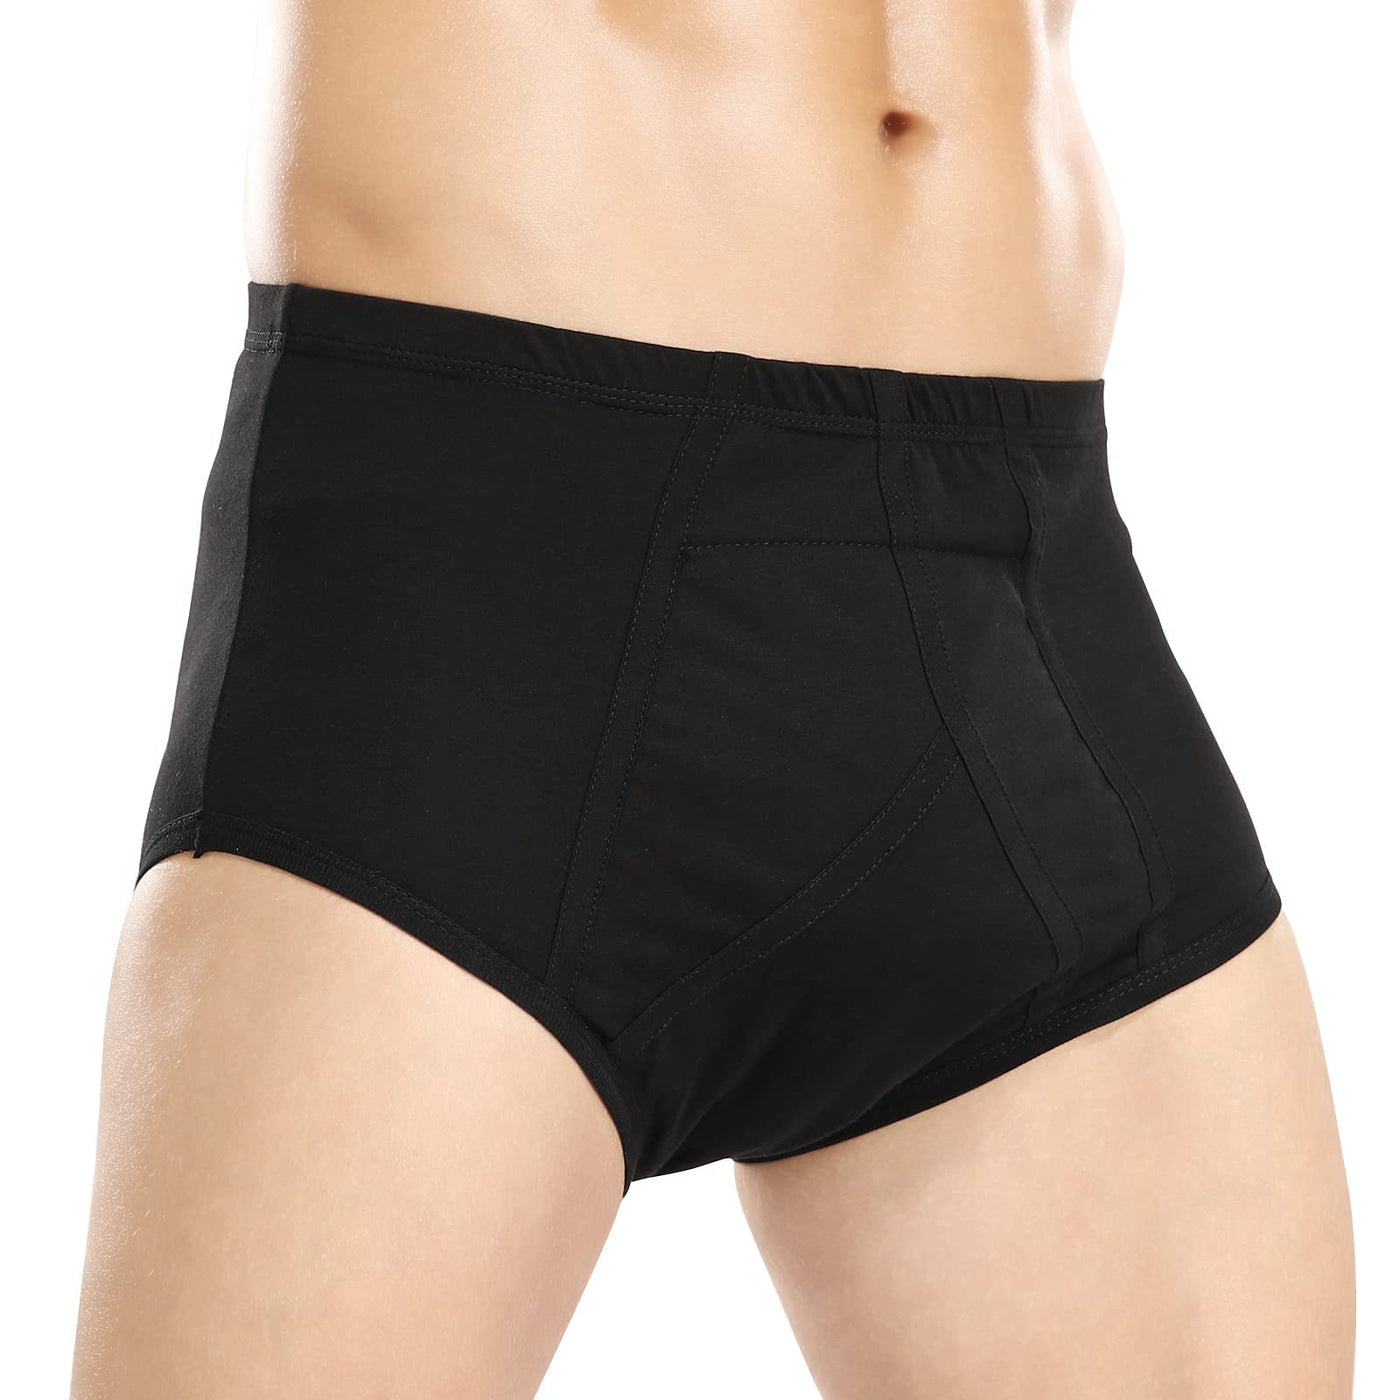 Mens Incontinence Underwear - Incontinence Pants For Men - Washable &  Reusable.